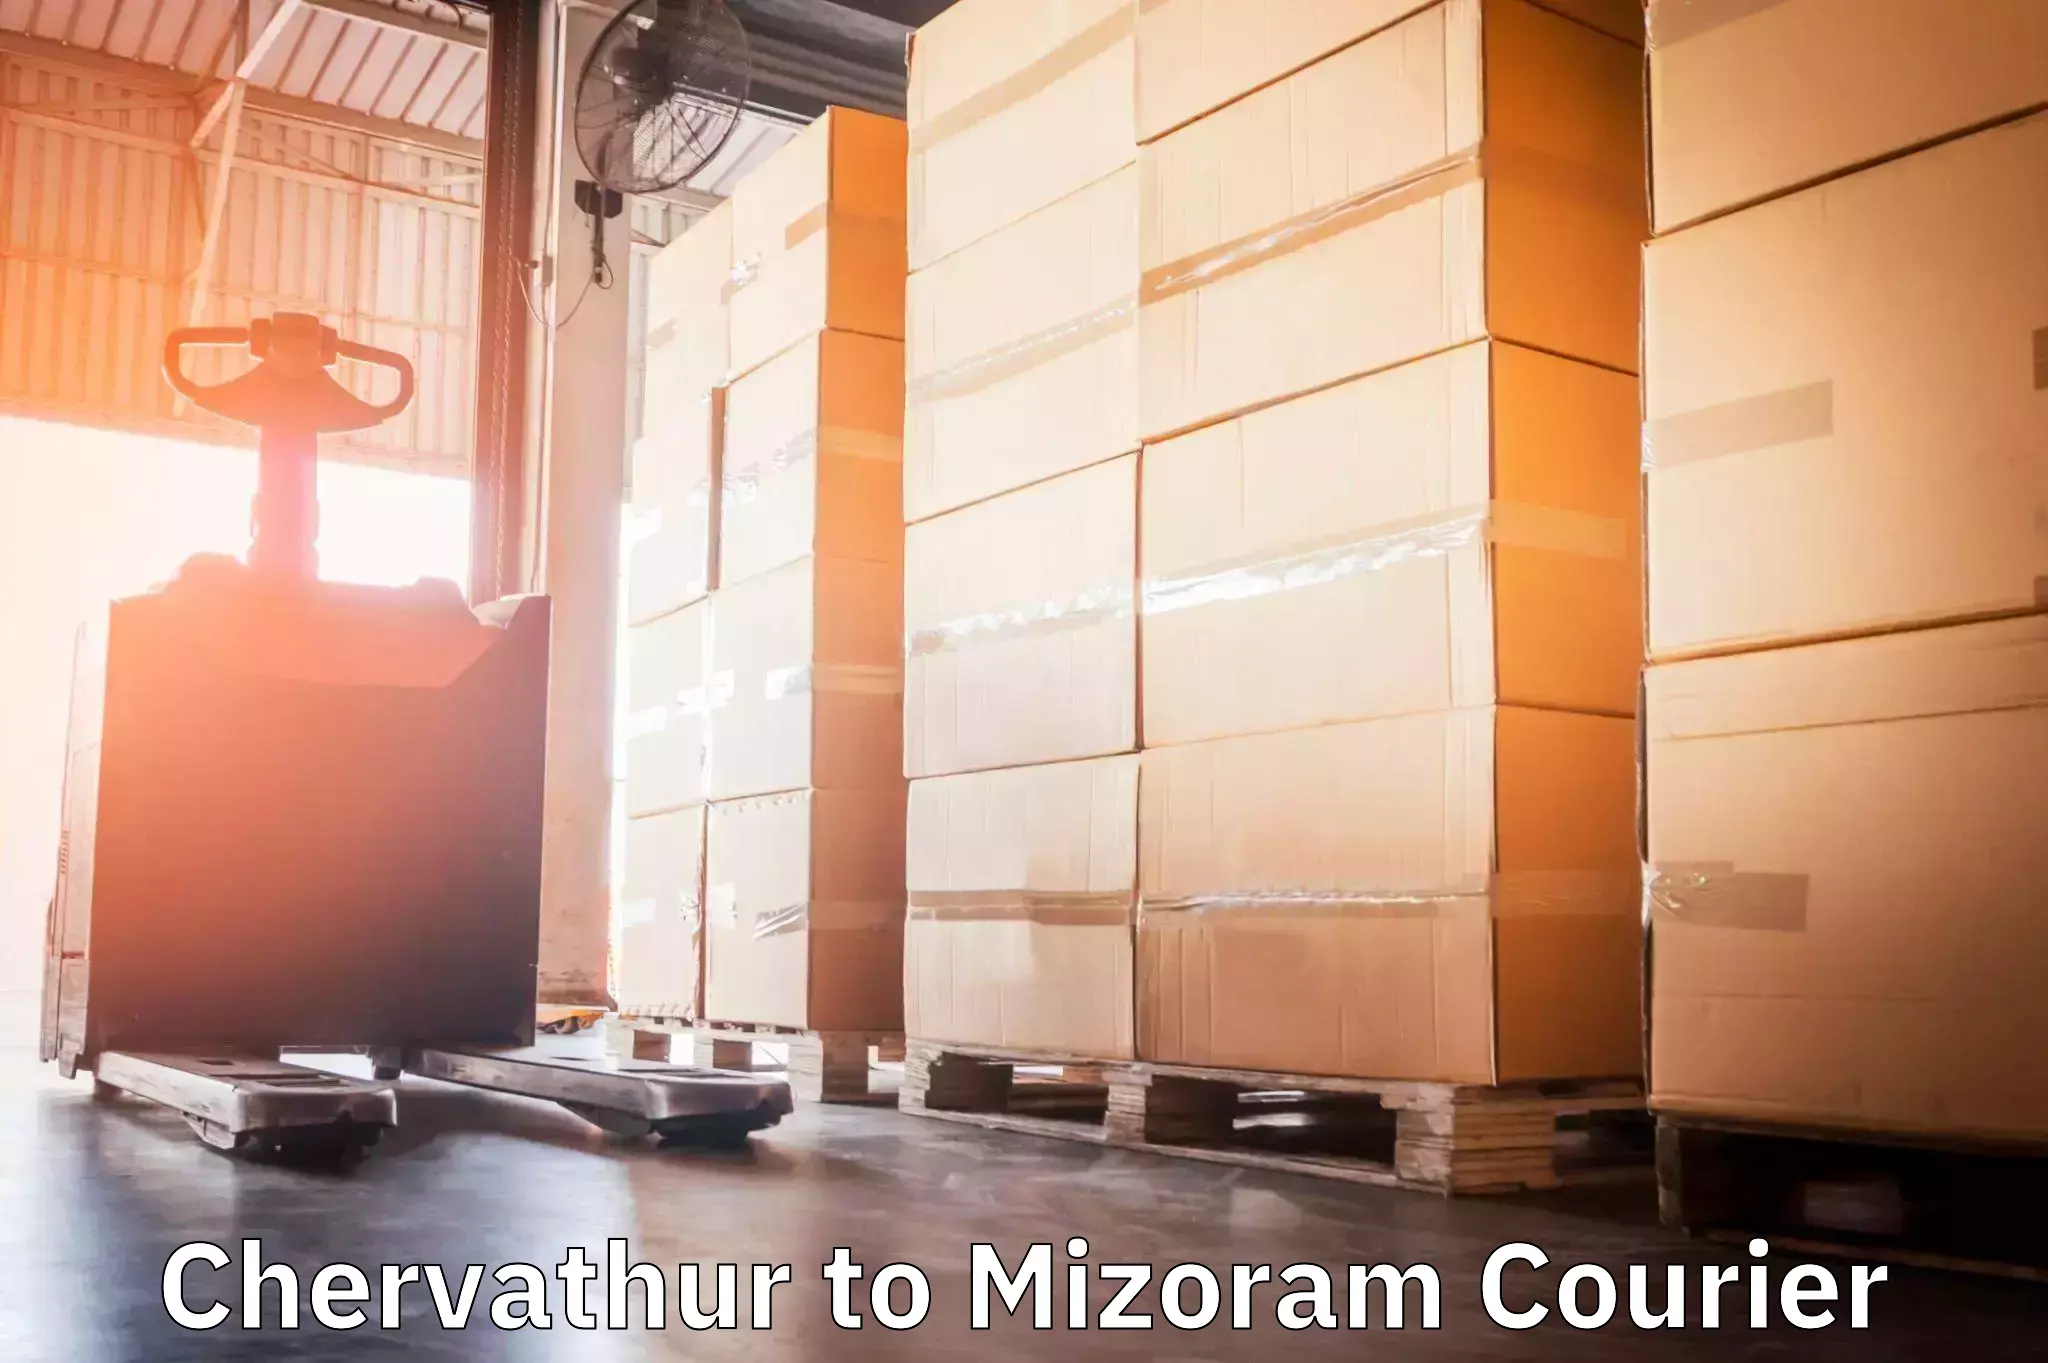 Customer-centric shipping Chervathur to Mizoram